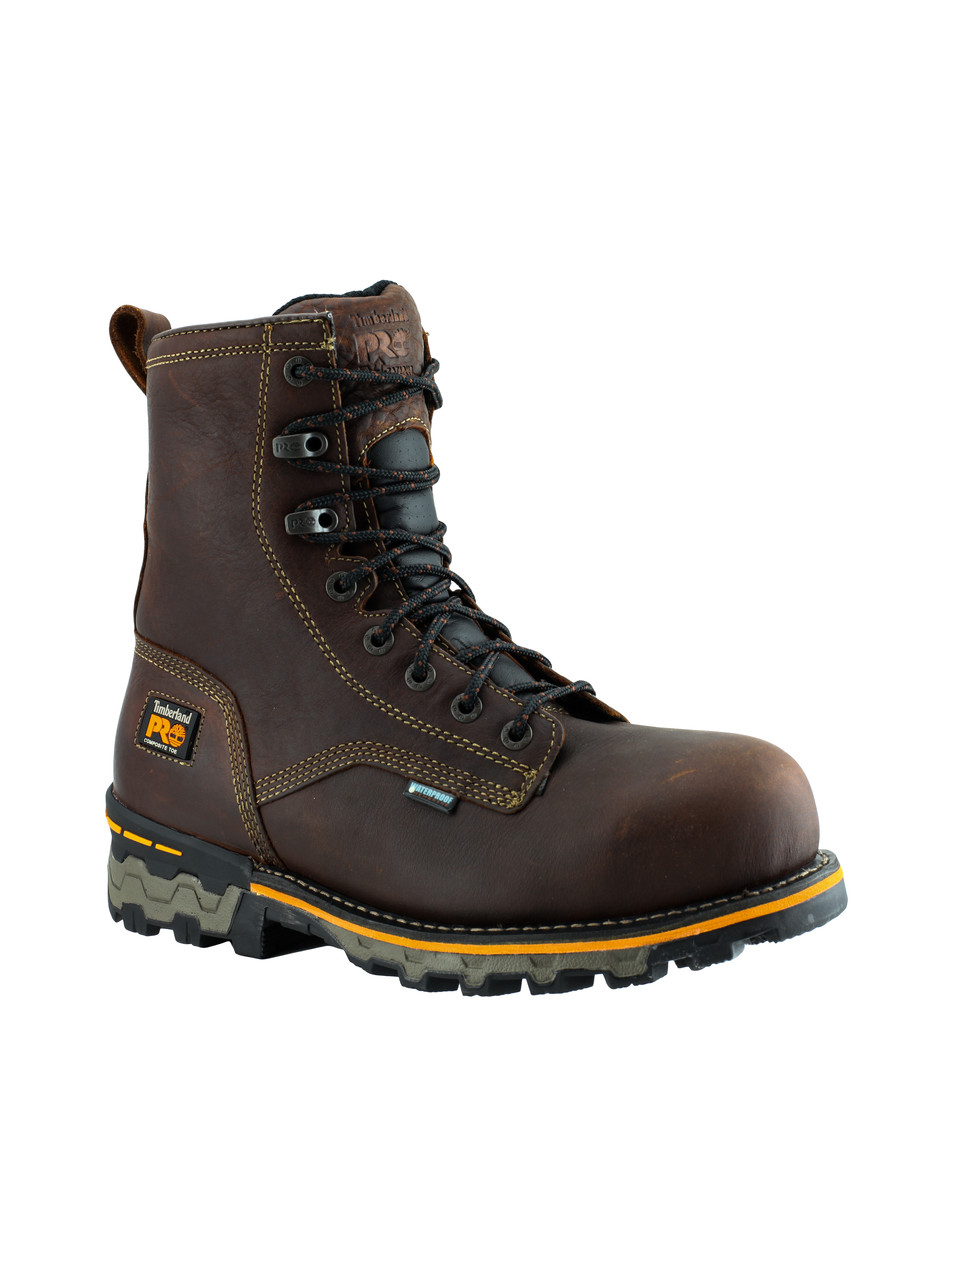 Timberland PRO Boondock Composite Toe Work Boot - 1112A - Bridgeport Boots